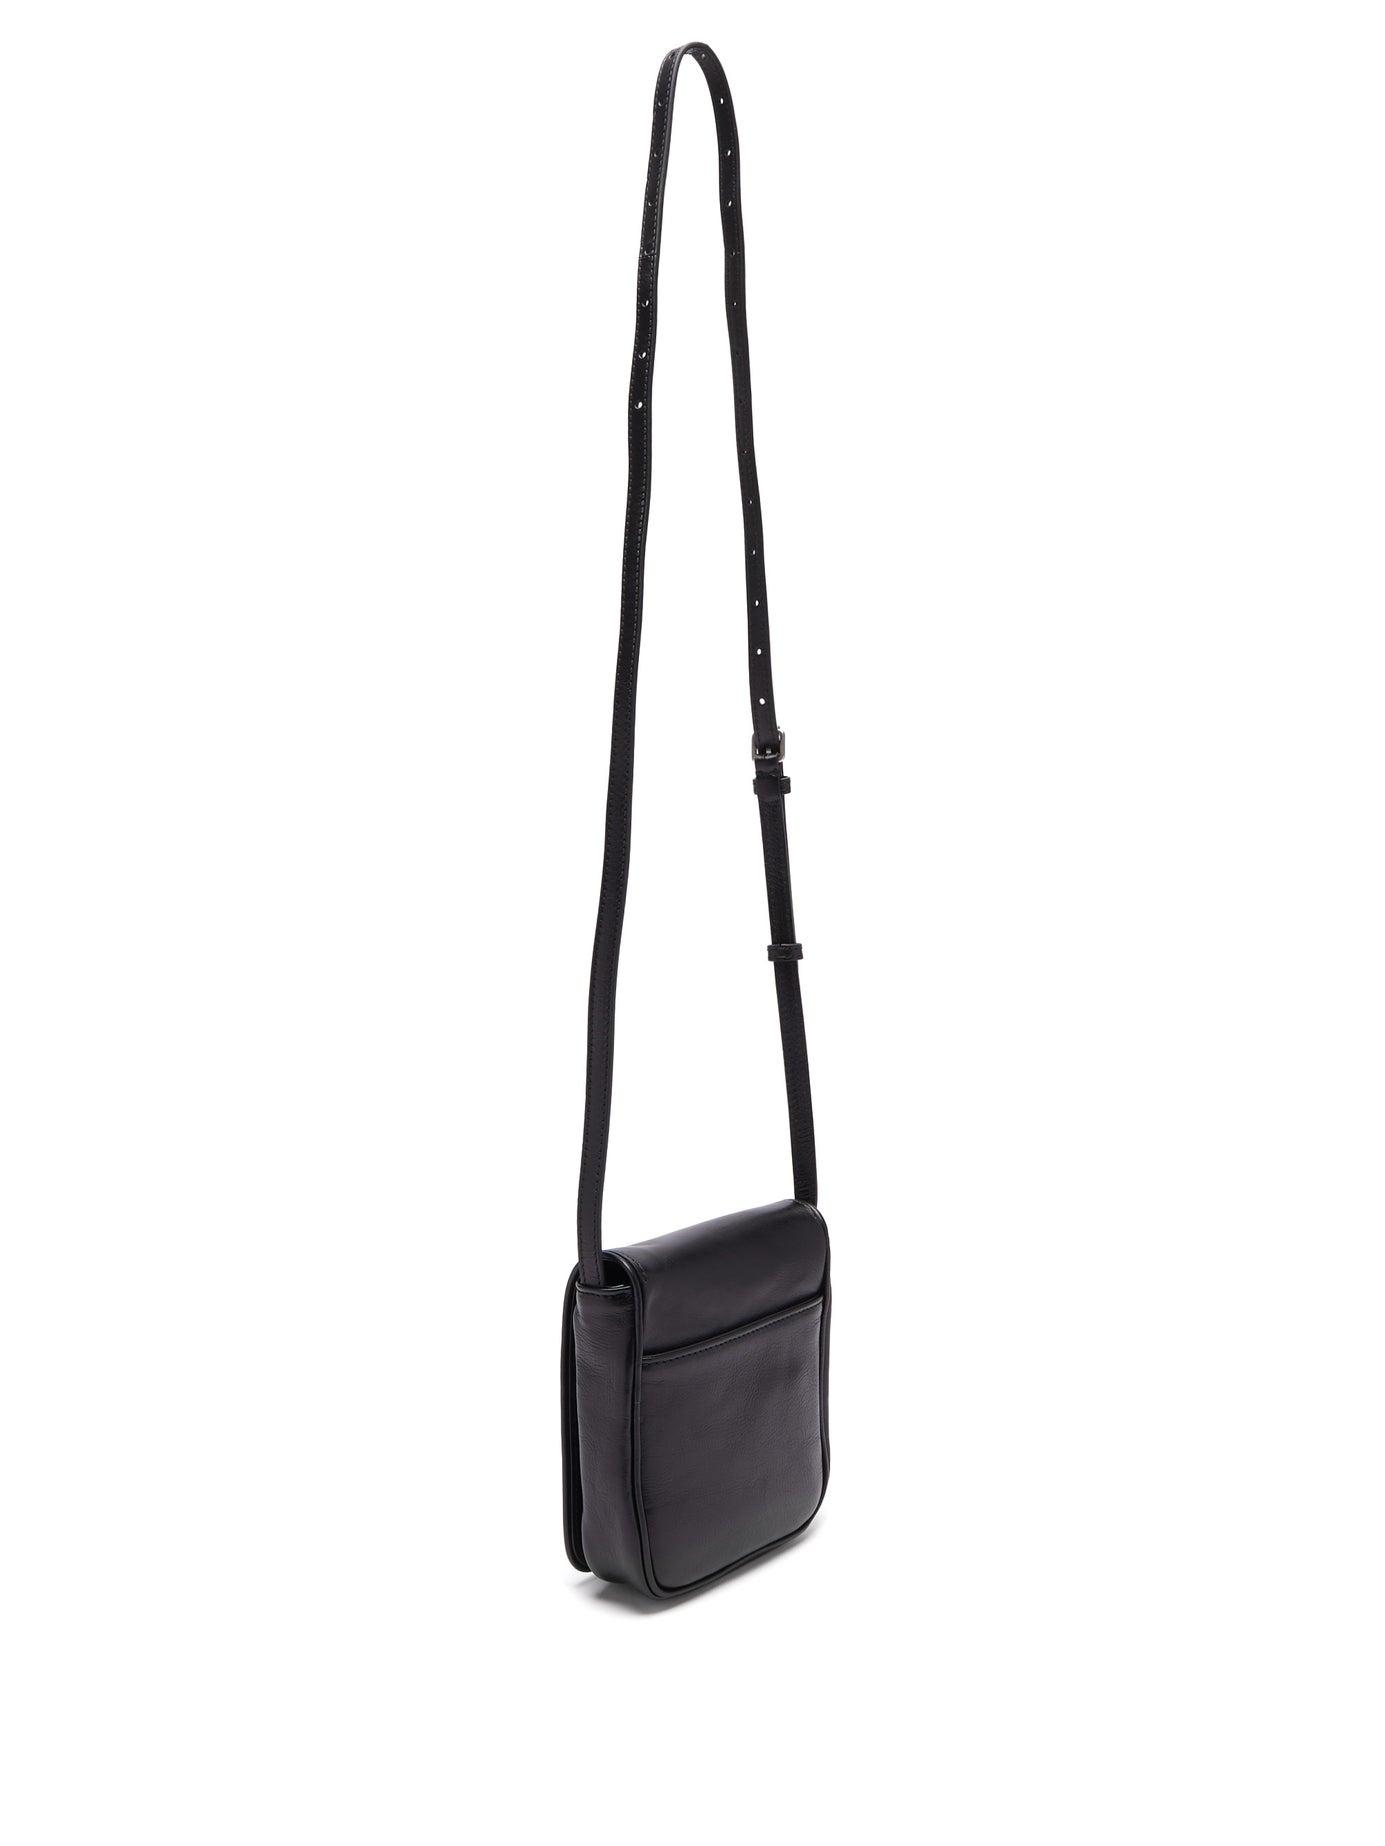 Balenciaga B Logo Leather Cross Body Bag in Black for Men - Lyst